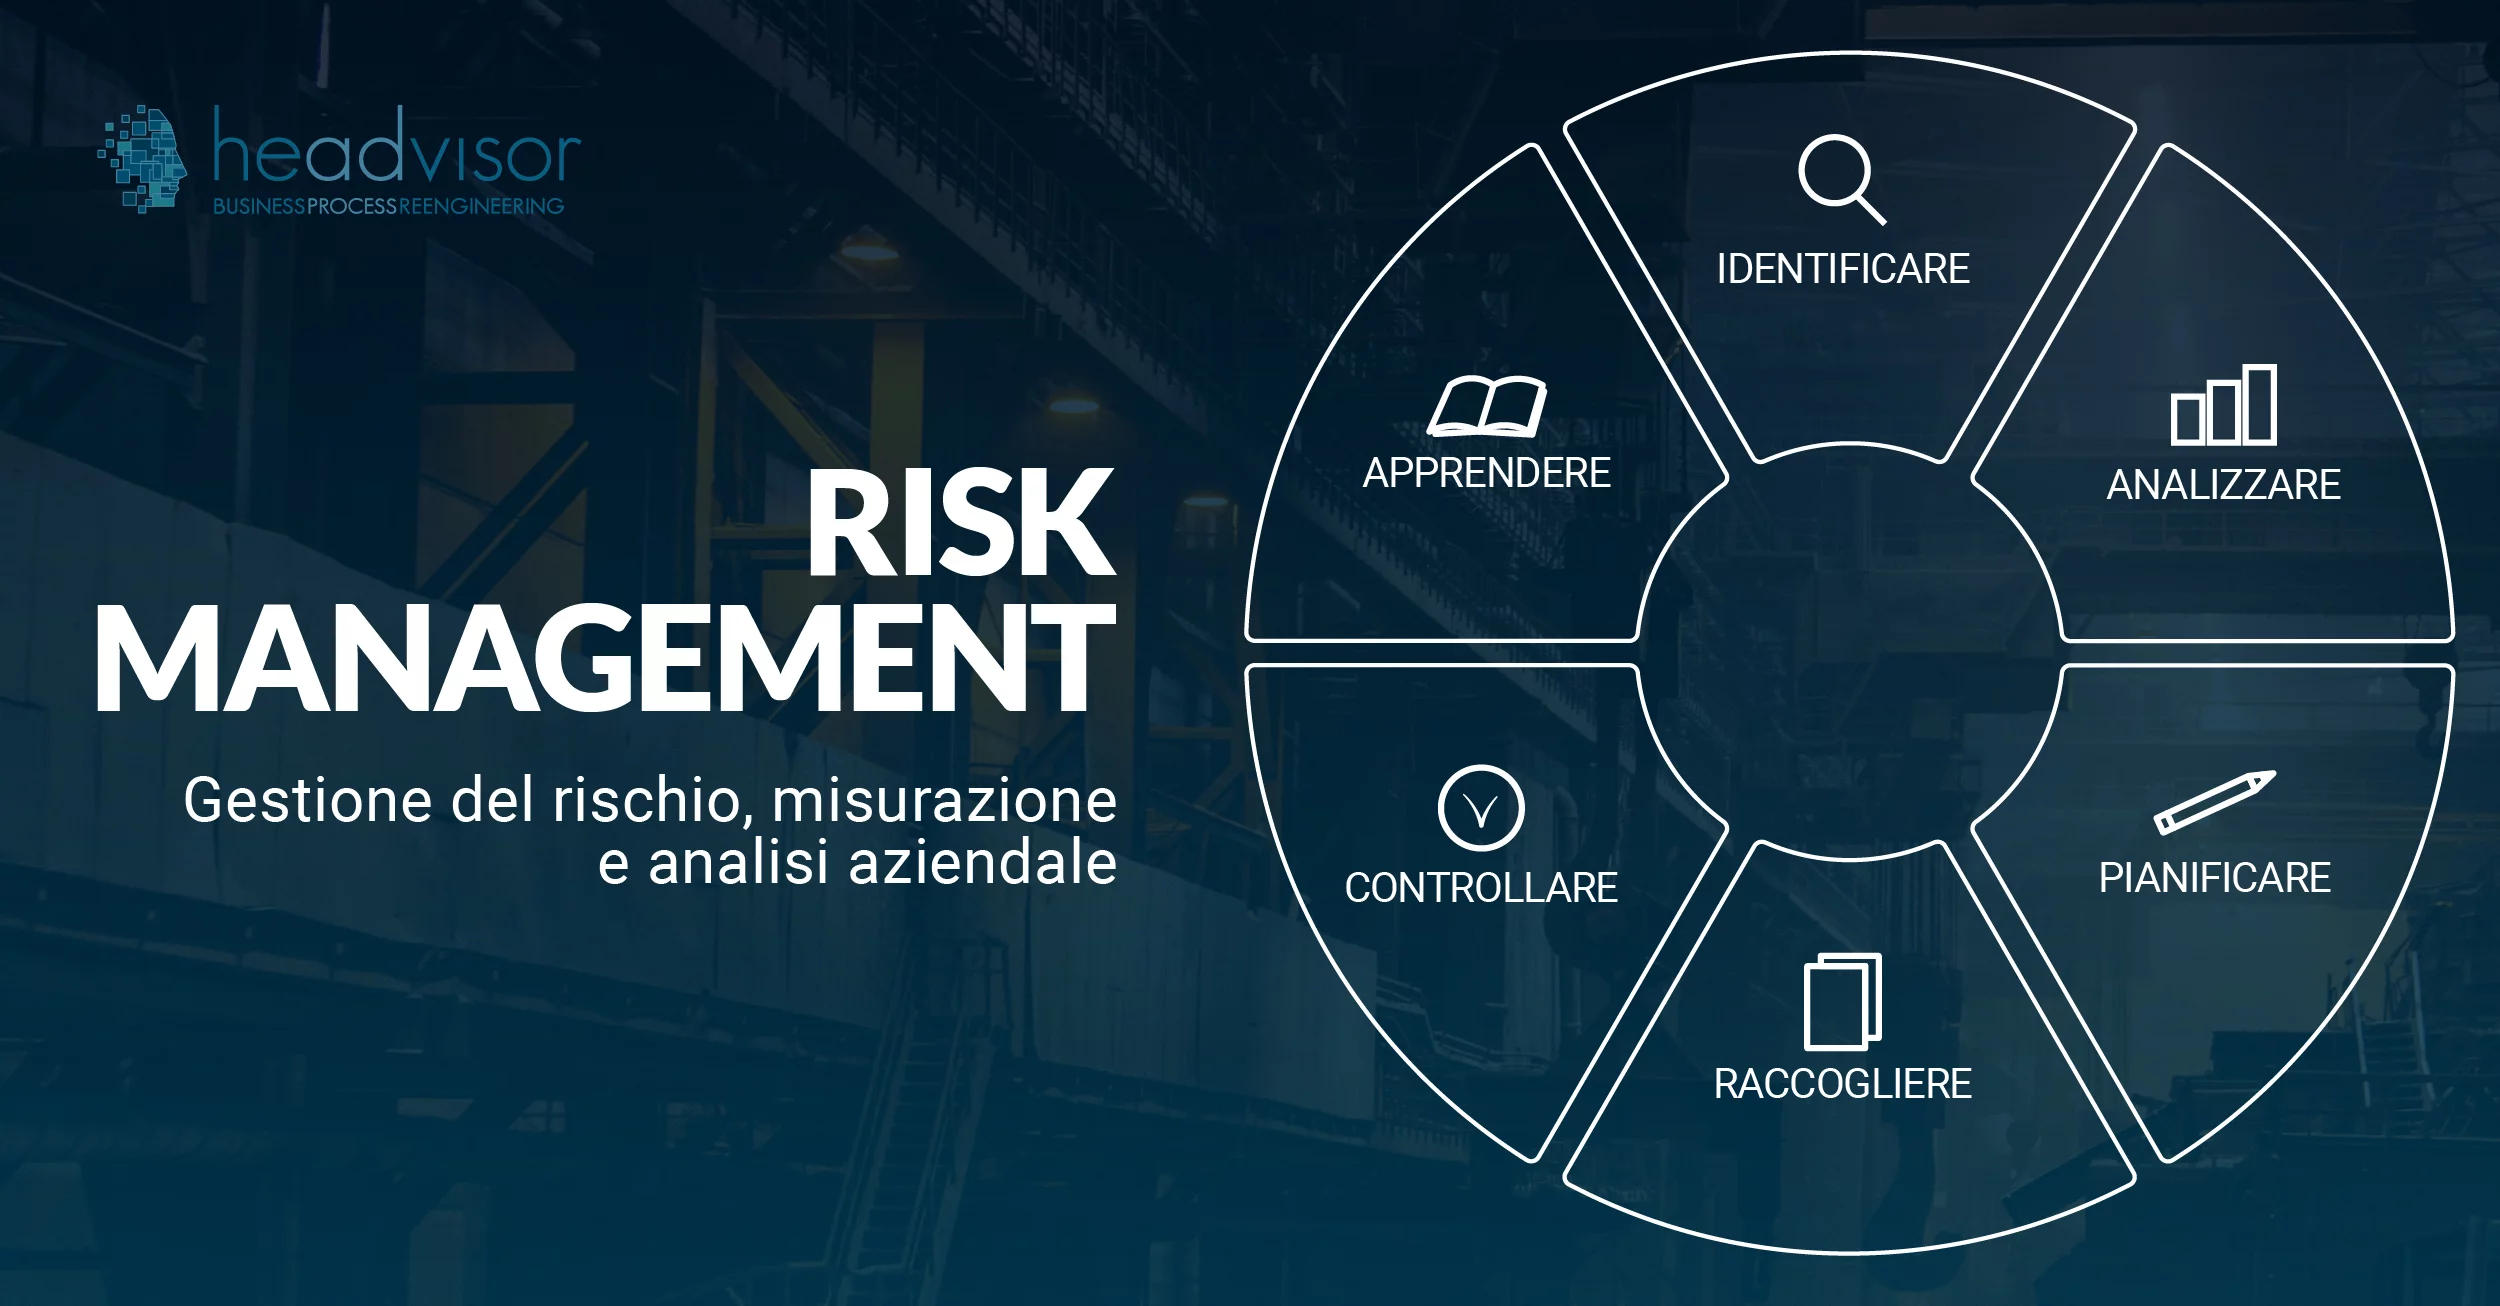 Risk Management: come funziona - Headvisor